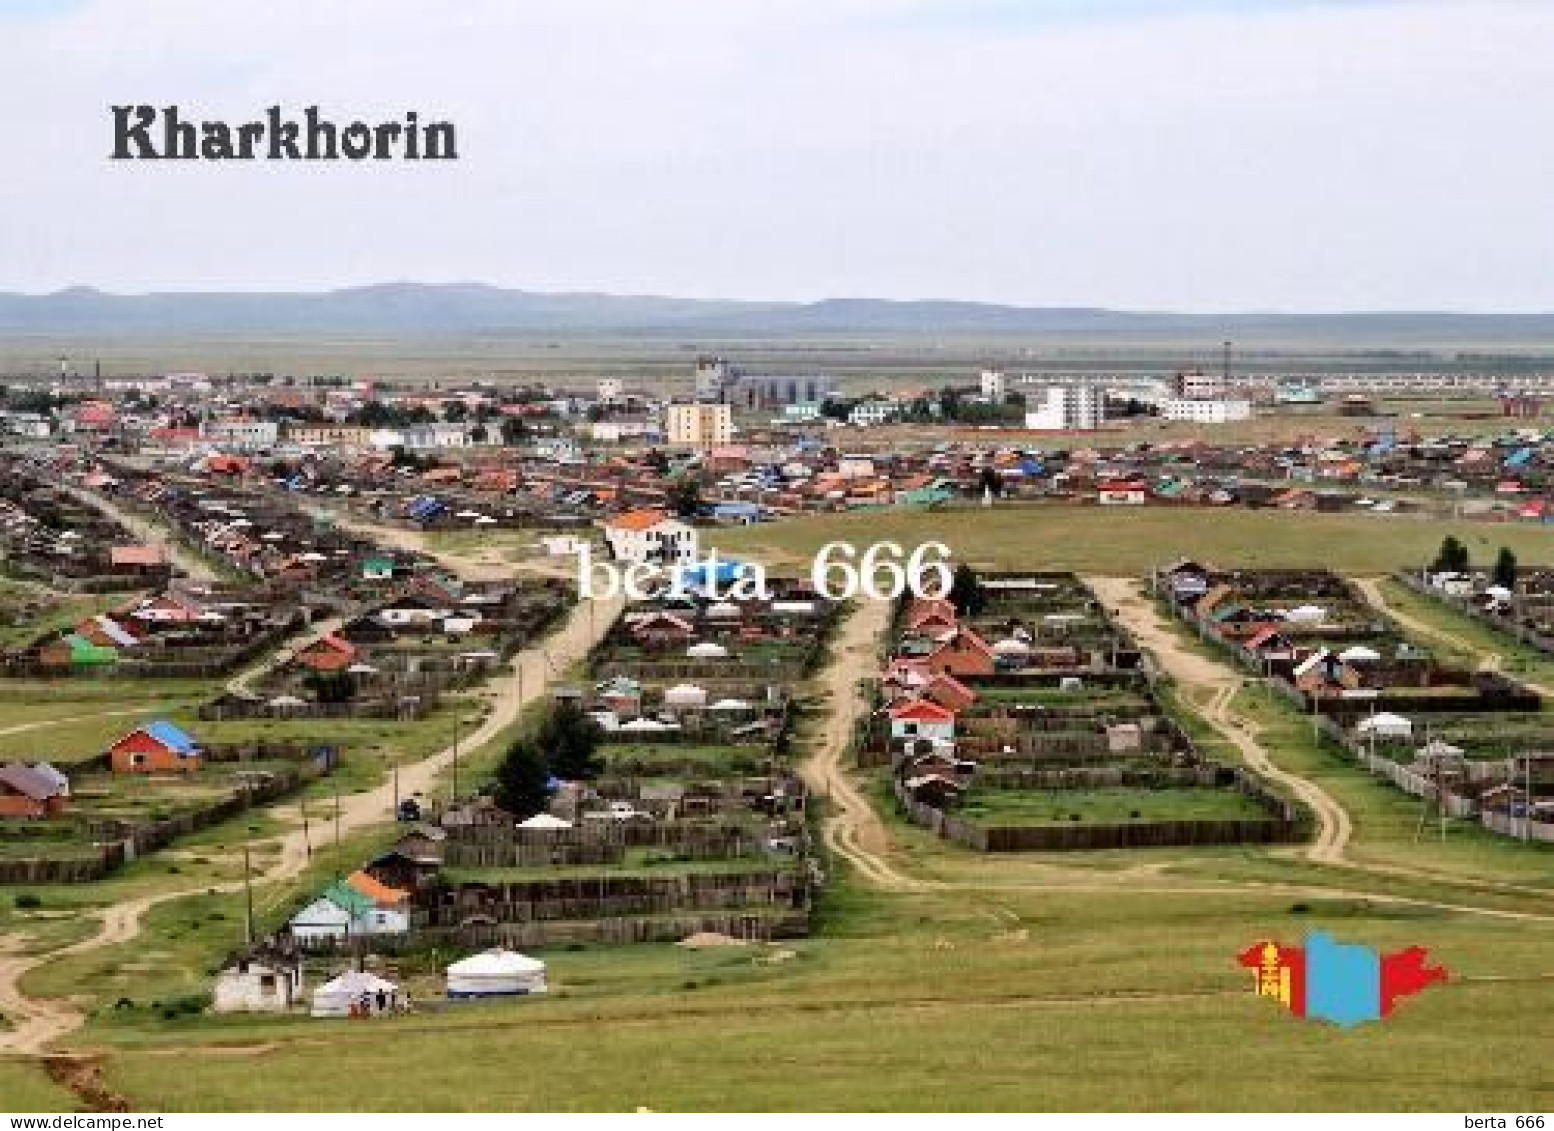 Mongolia Kharkhorin Aerial View New Postcard - Mongolia